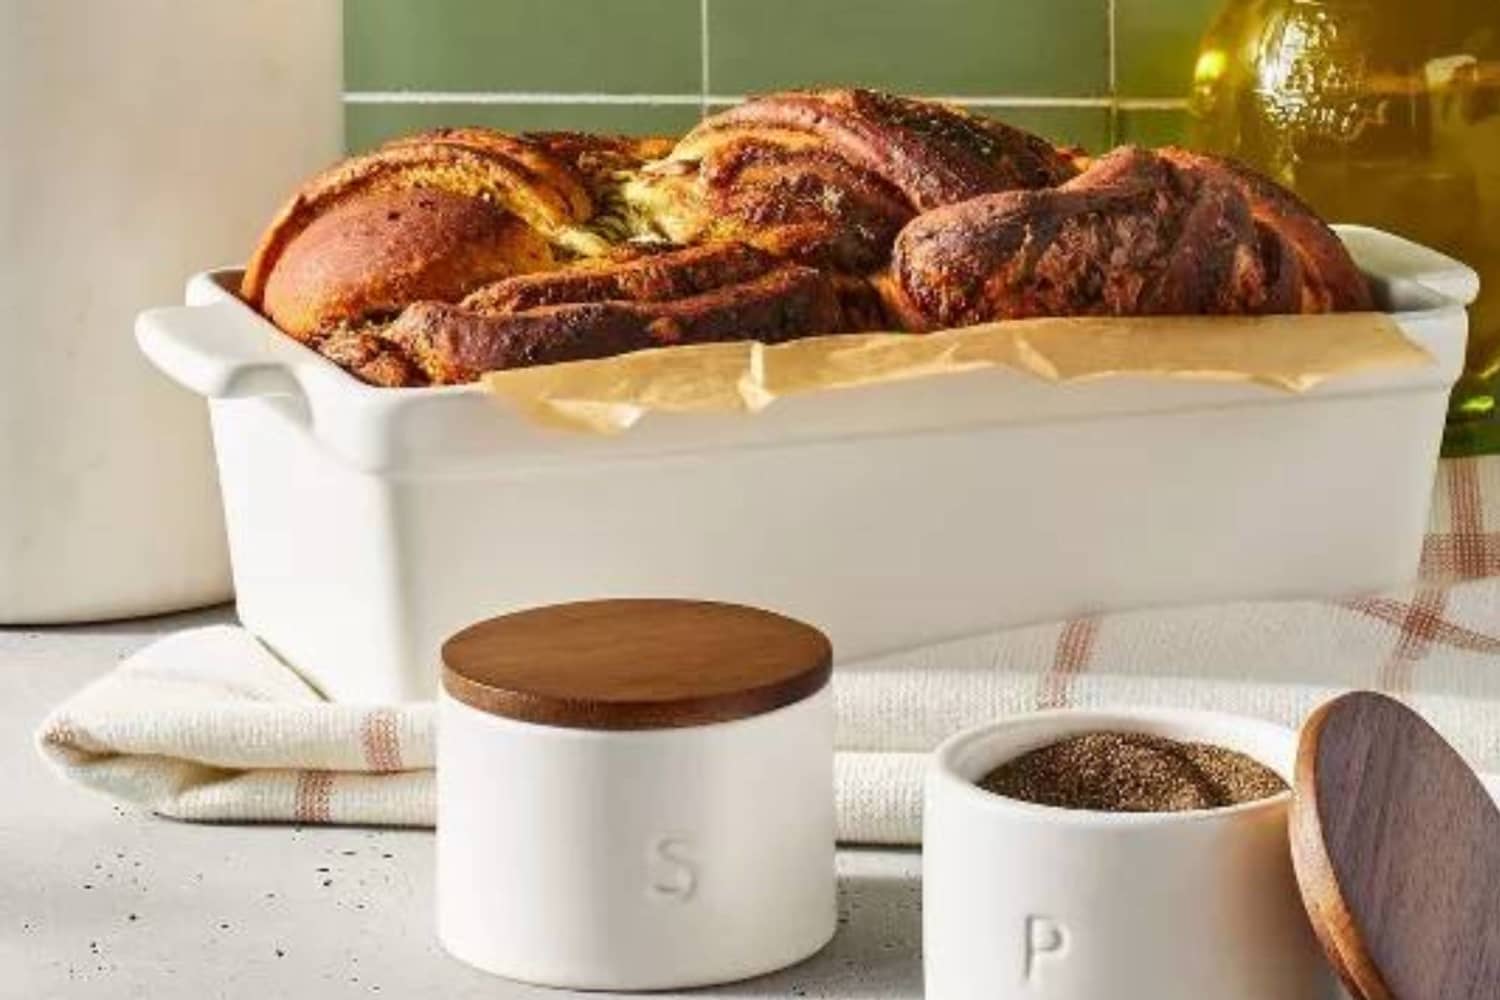 Circulon Total Bakeware Nonstick Toaster Oven & Personal Pizza Pan Baking Set 4-Piece